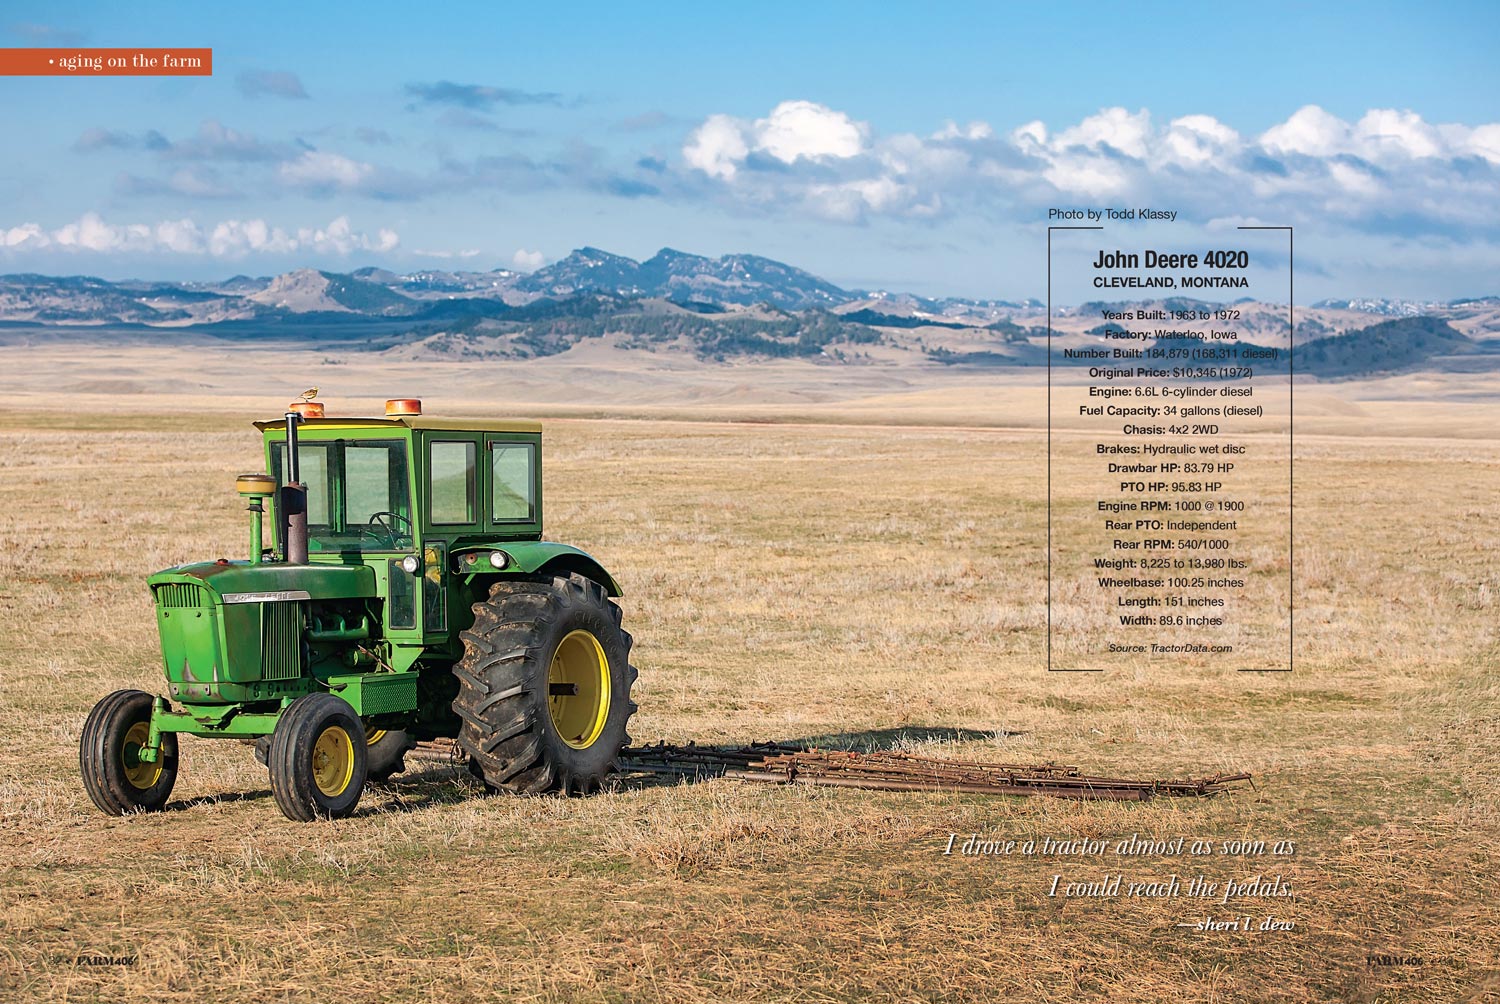 Farm-Equipment-Stock-Photography-Featured-in-Farm406-Magazine